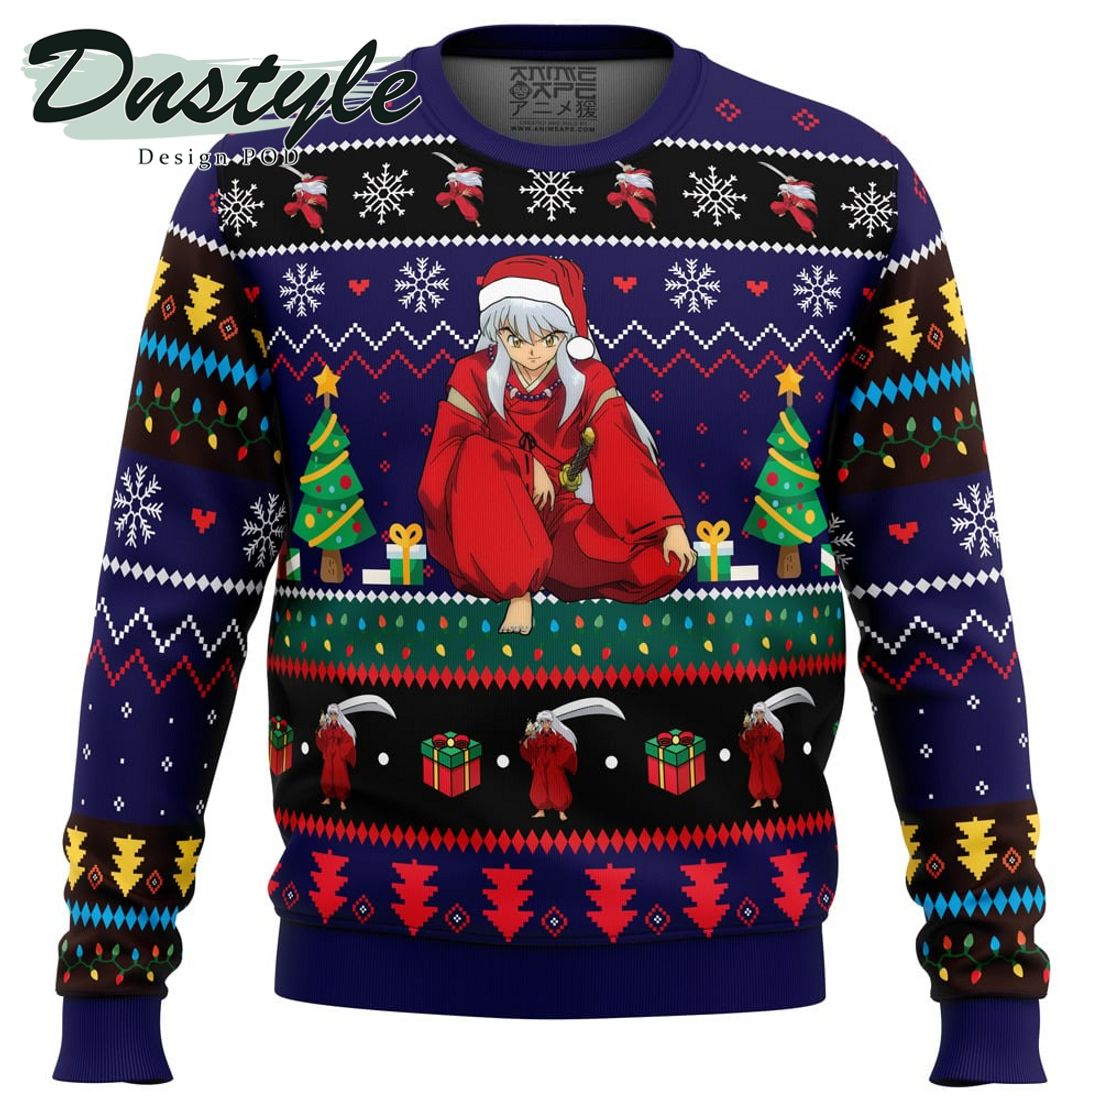 Inuyasha Ugly Christmas Sweater